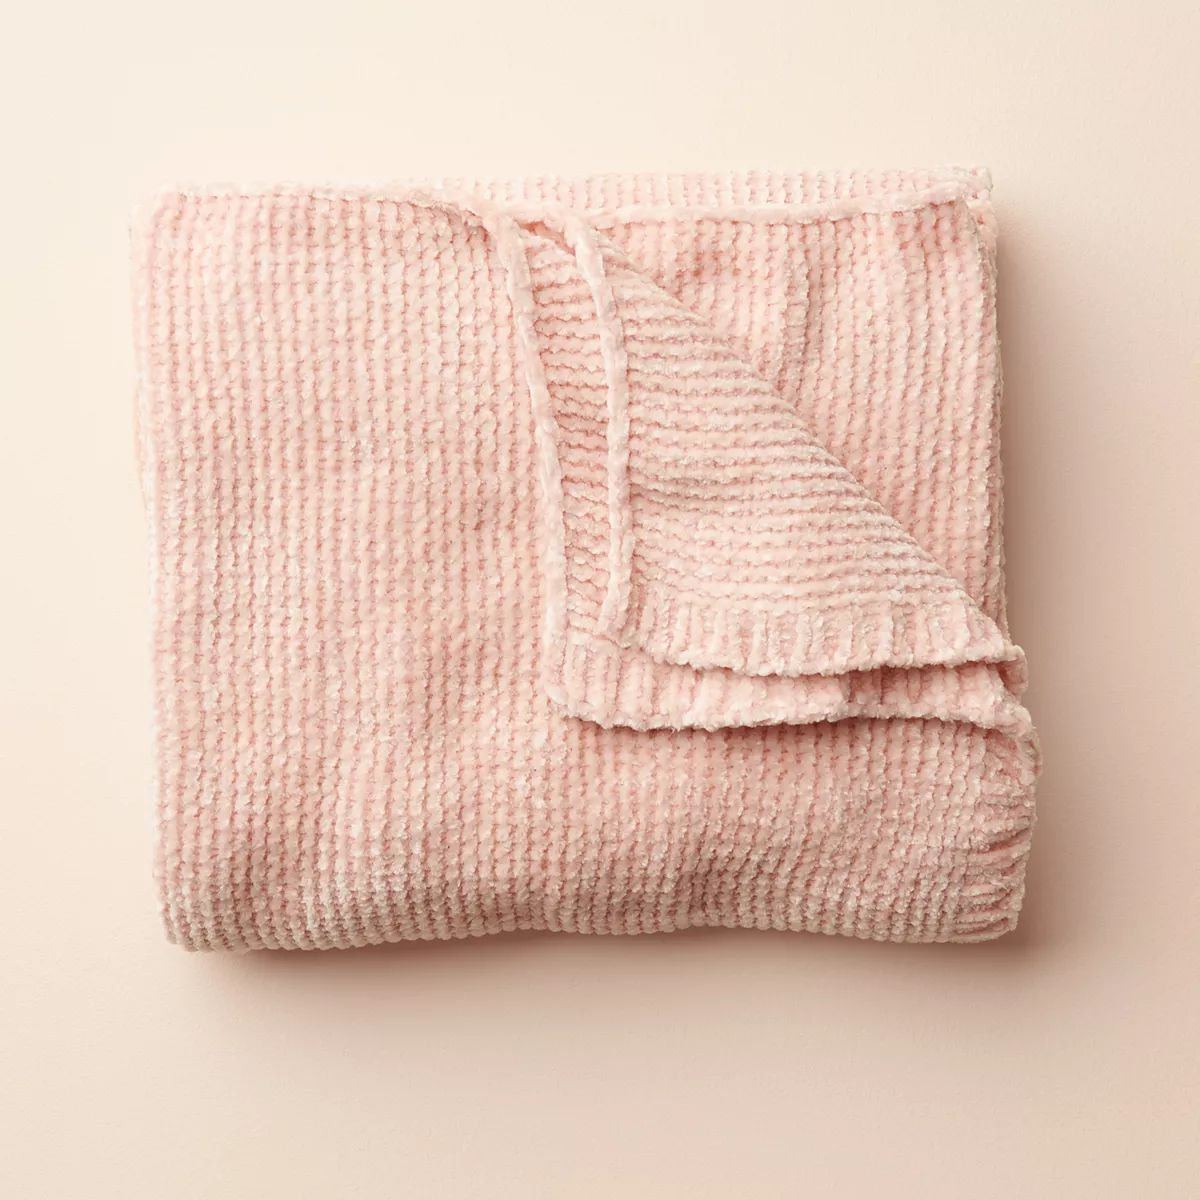 Little Co. by Lauren Conrad Throw Blanket | Kohl's